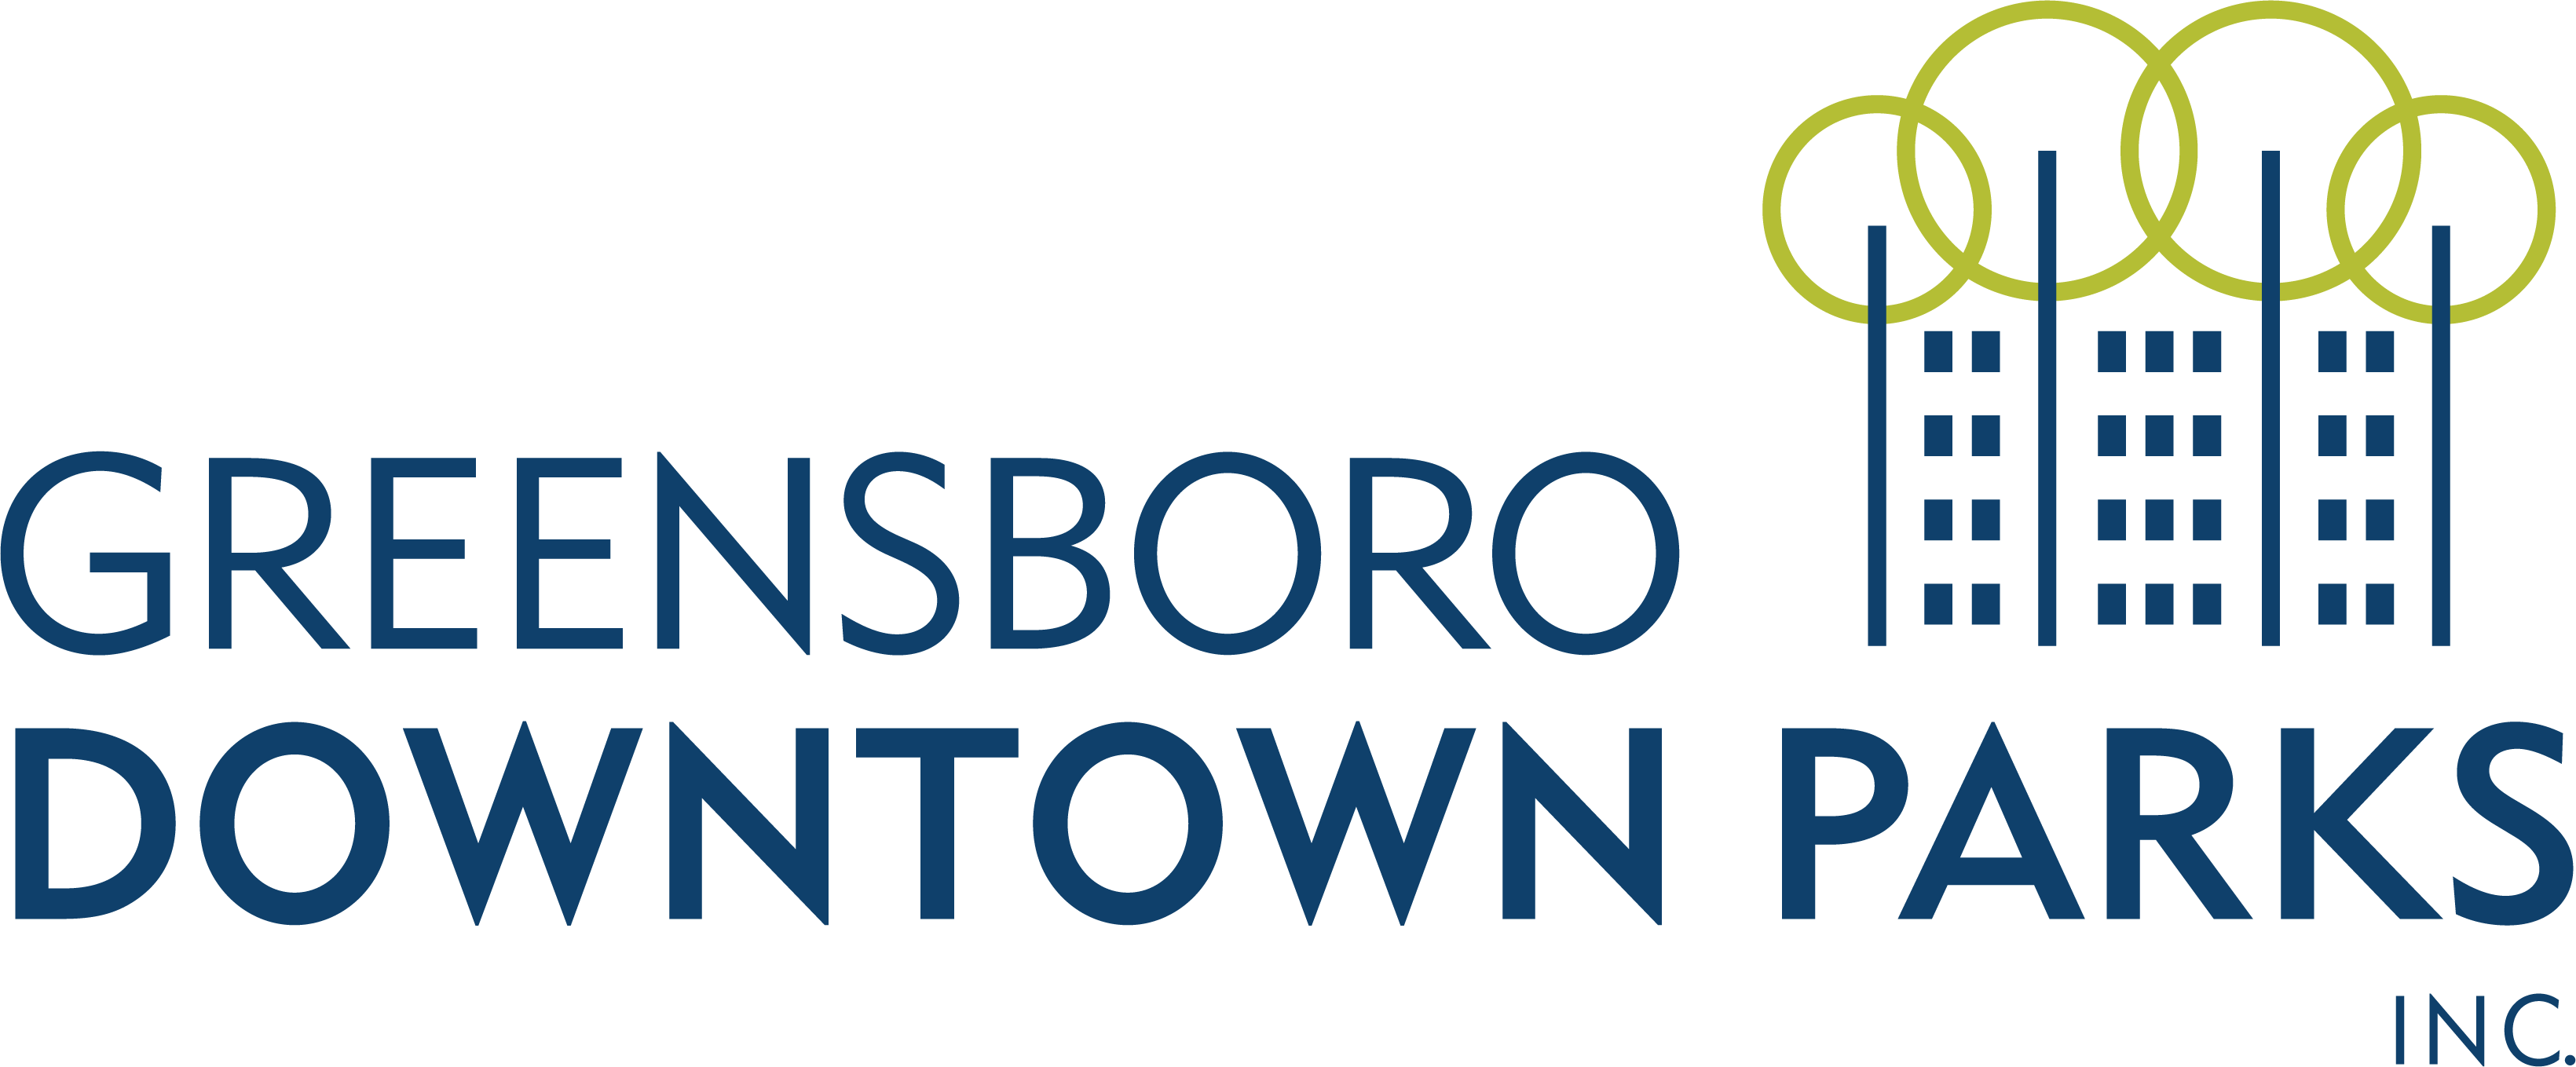 Greensboro Downtown Parks, Inc. logo